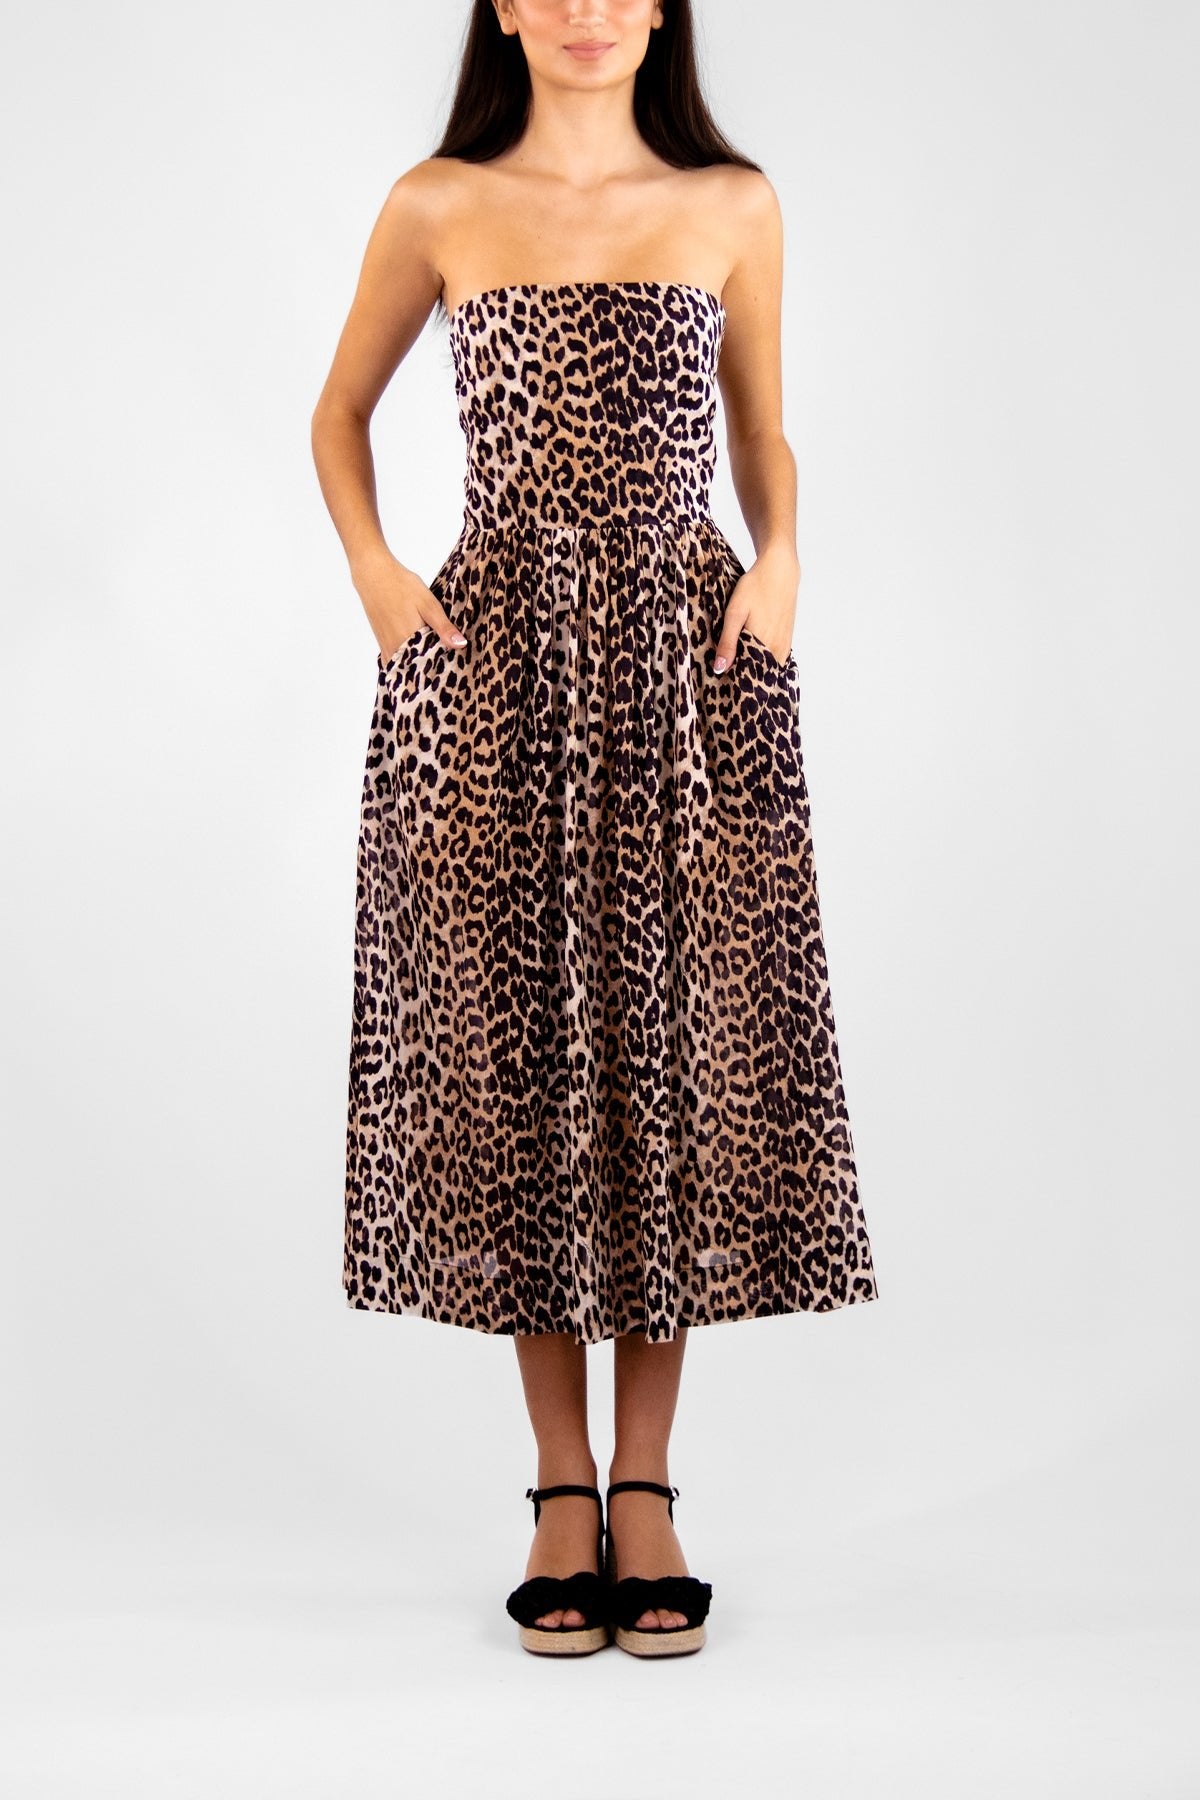 Tieband Multifunctional Dress in Leopard - shop-olivia.com